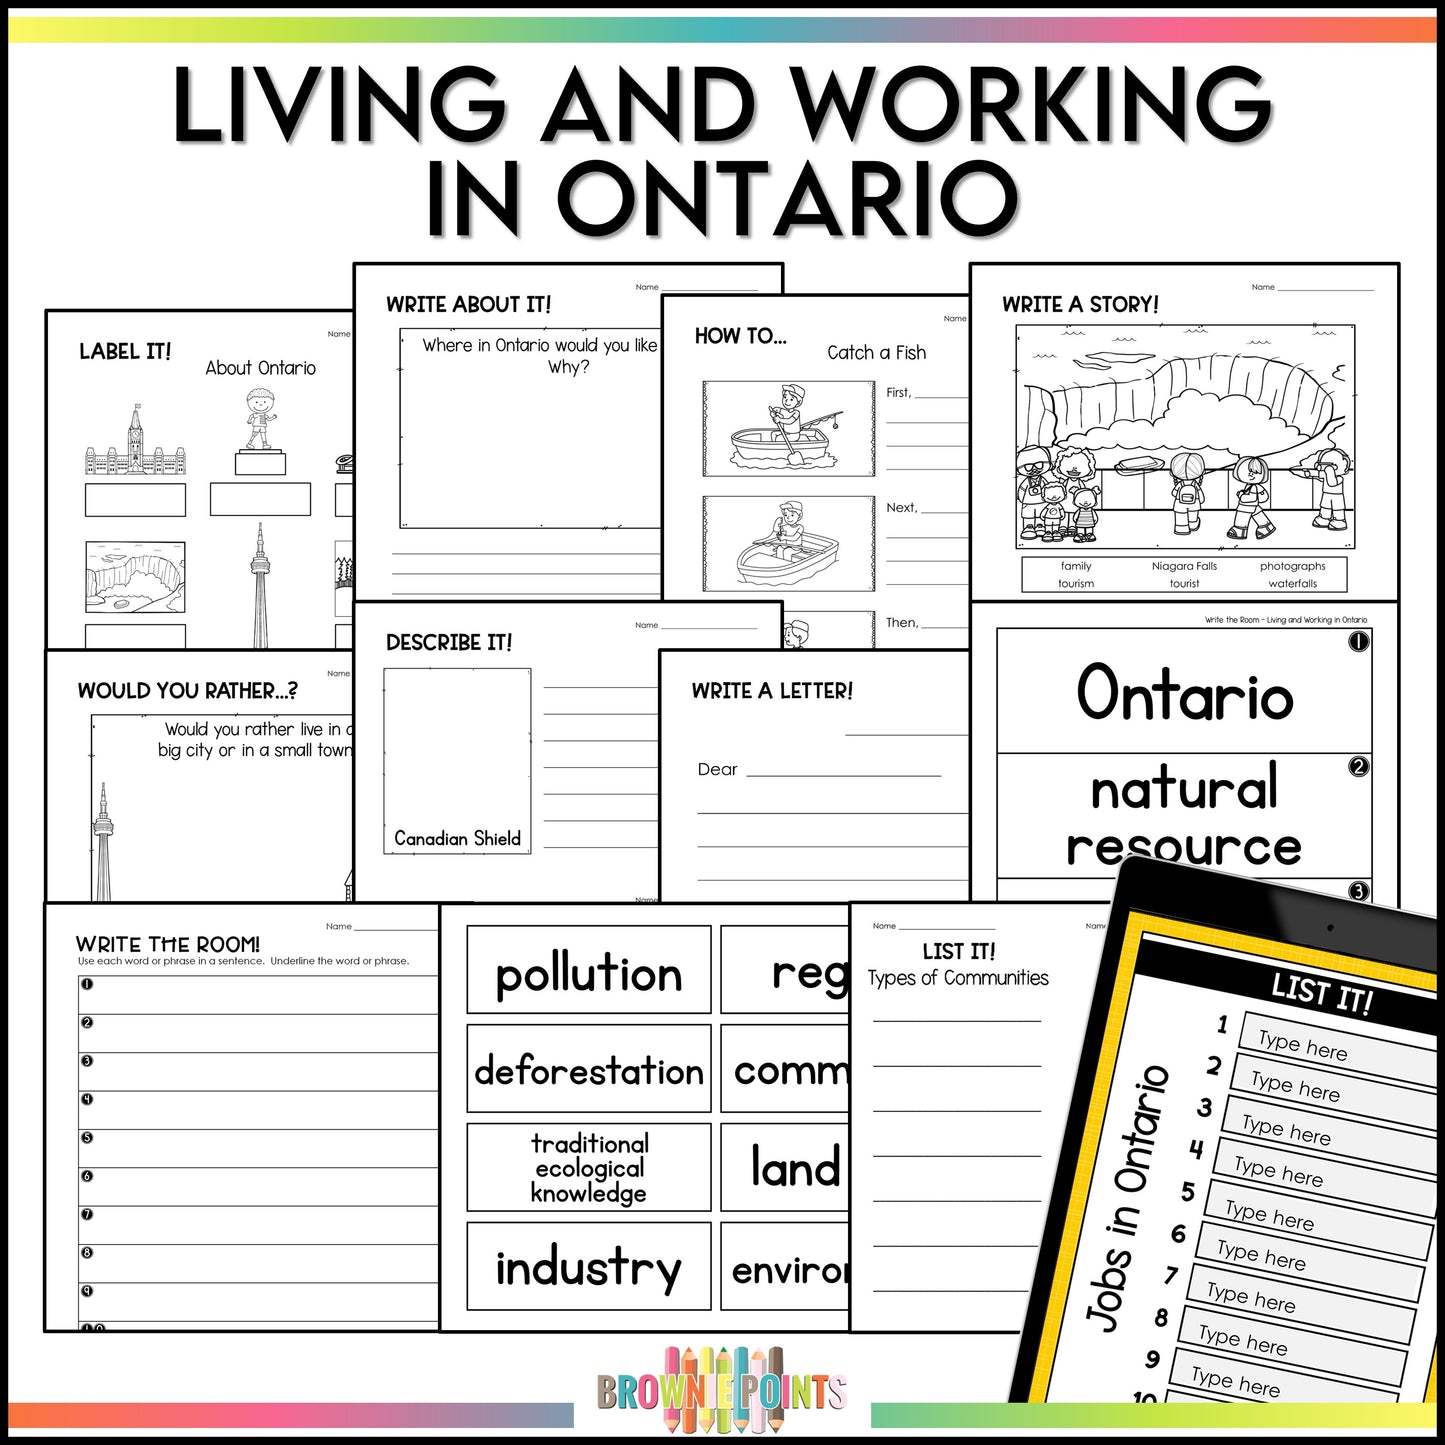 Work on Writing - Grade 3 Ontario Curriculum Bundle